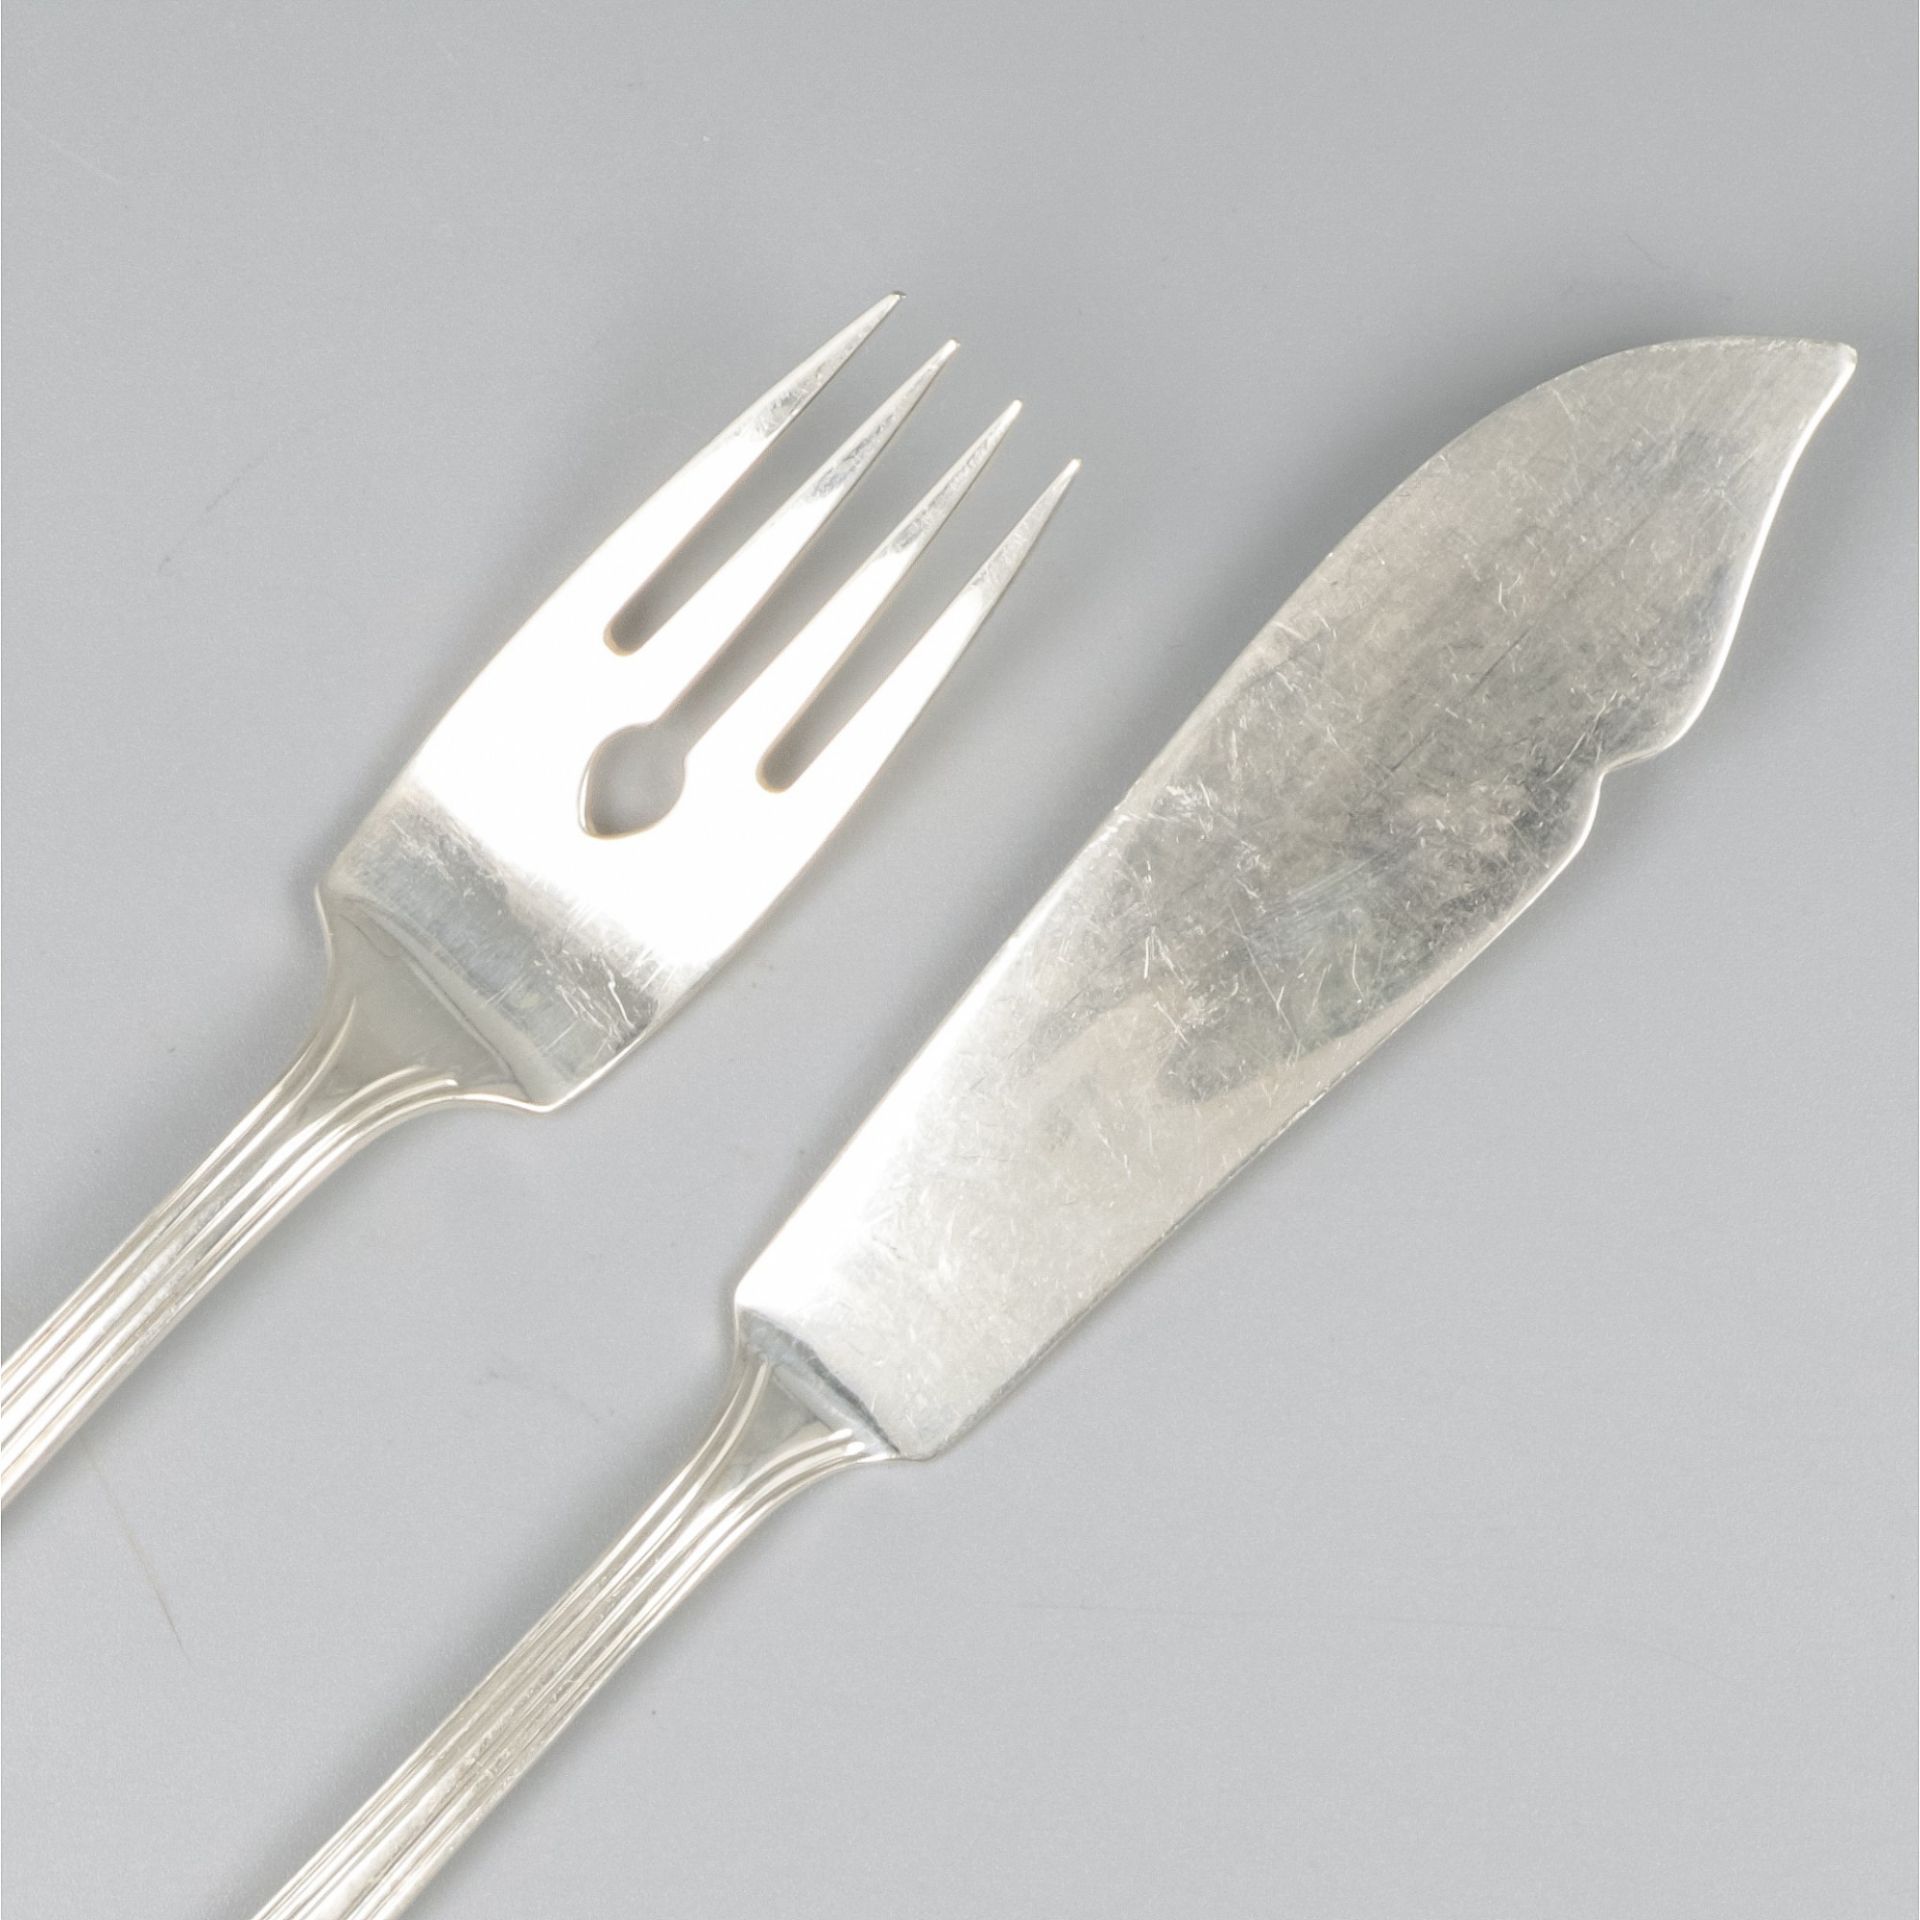 12-piece fish cutlery, silver. - Image 4 of 6